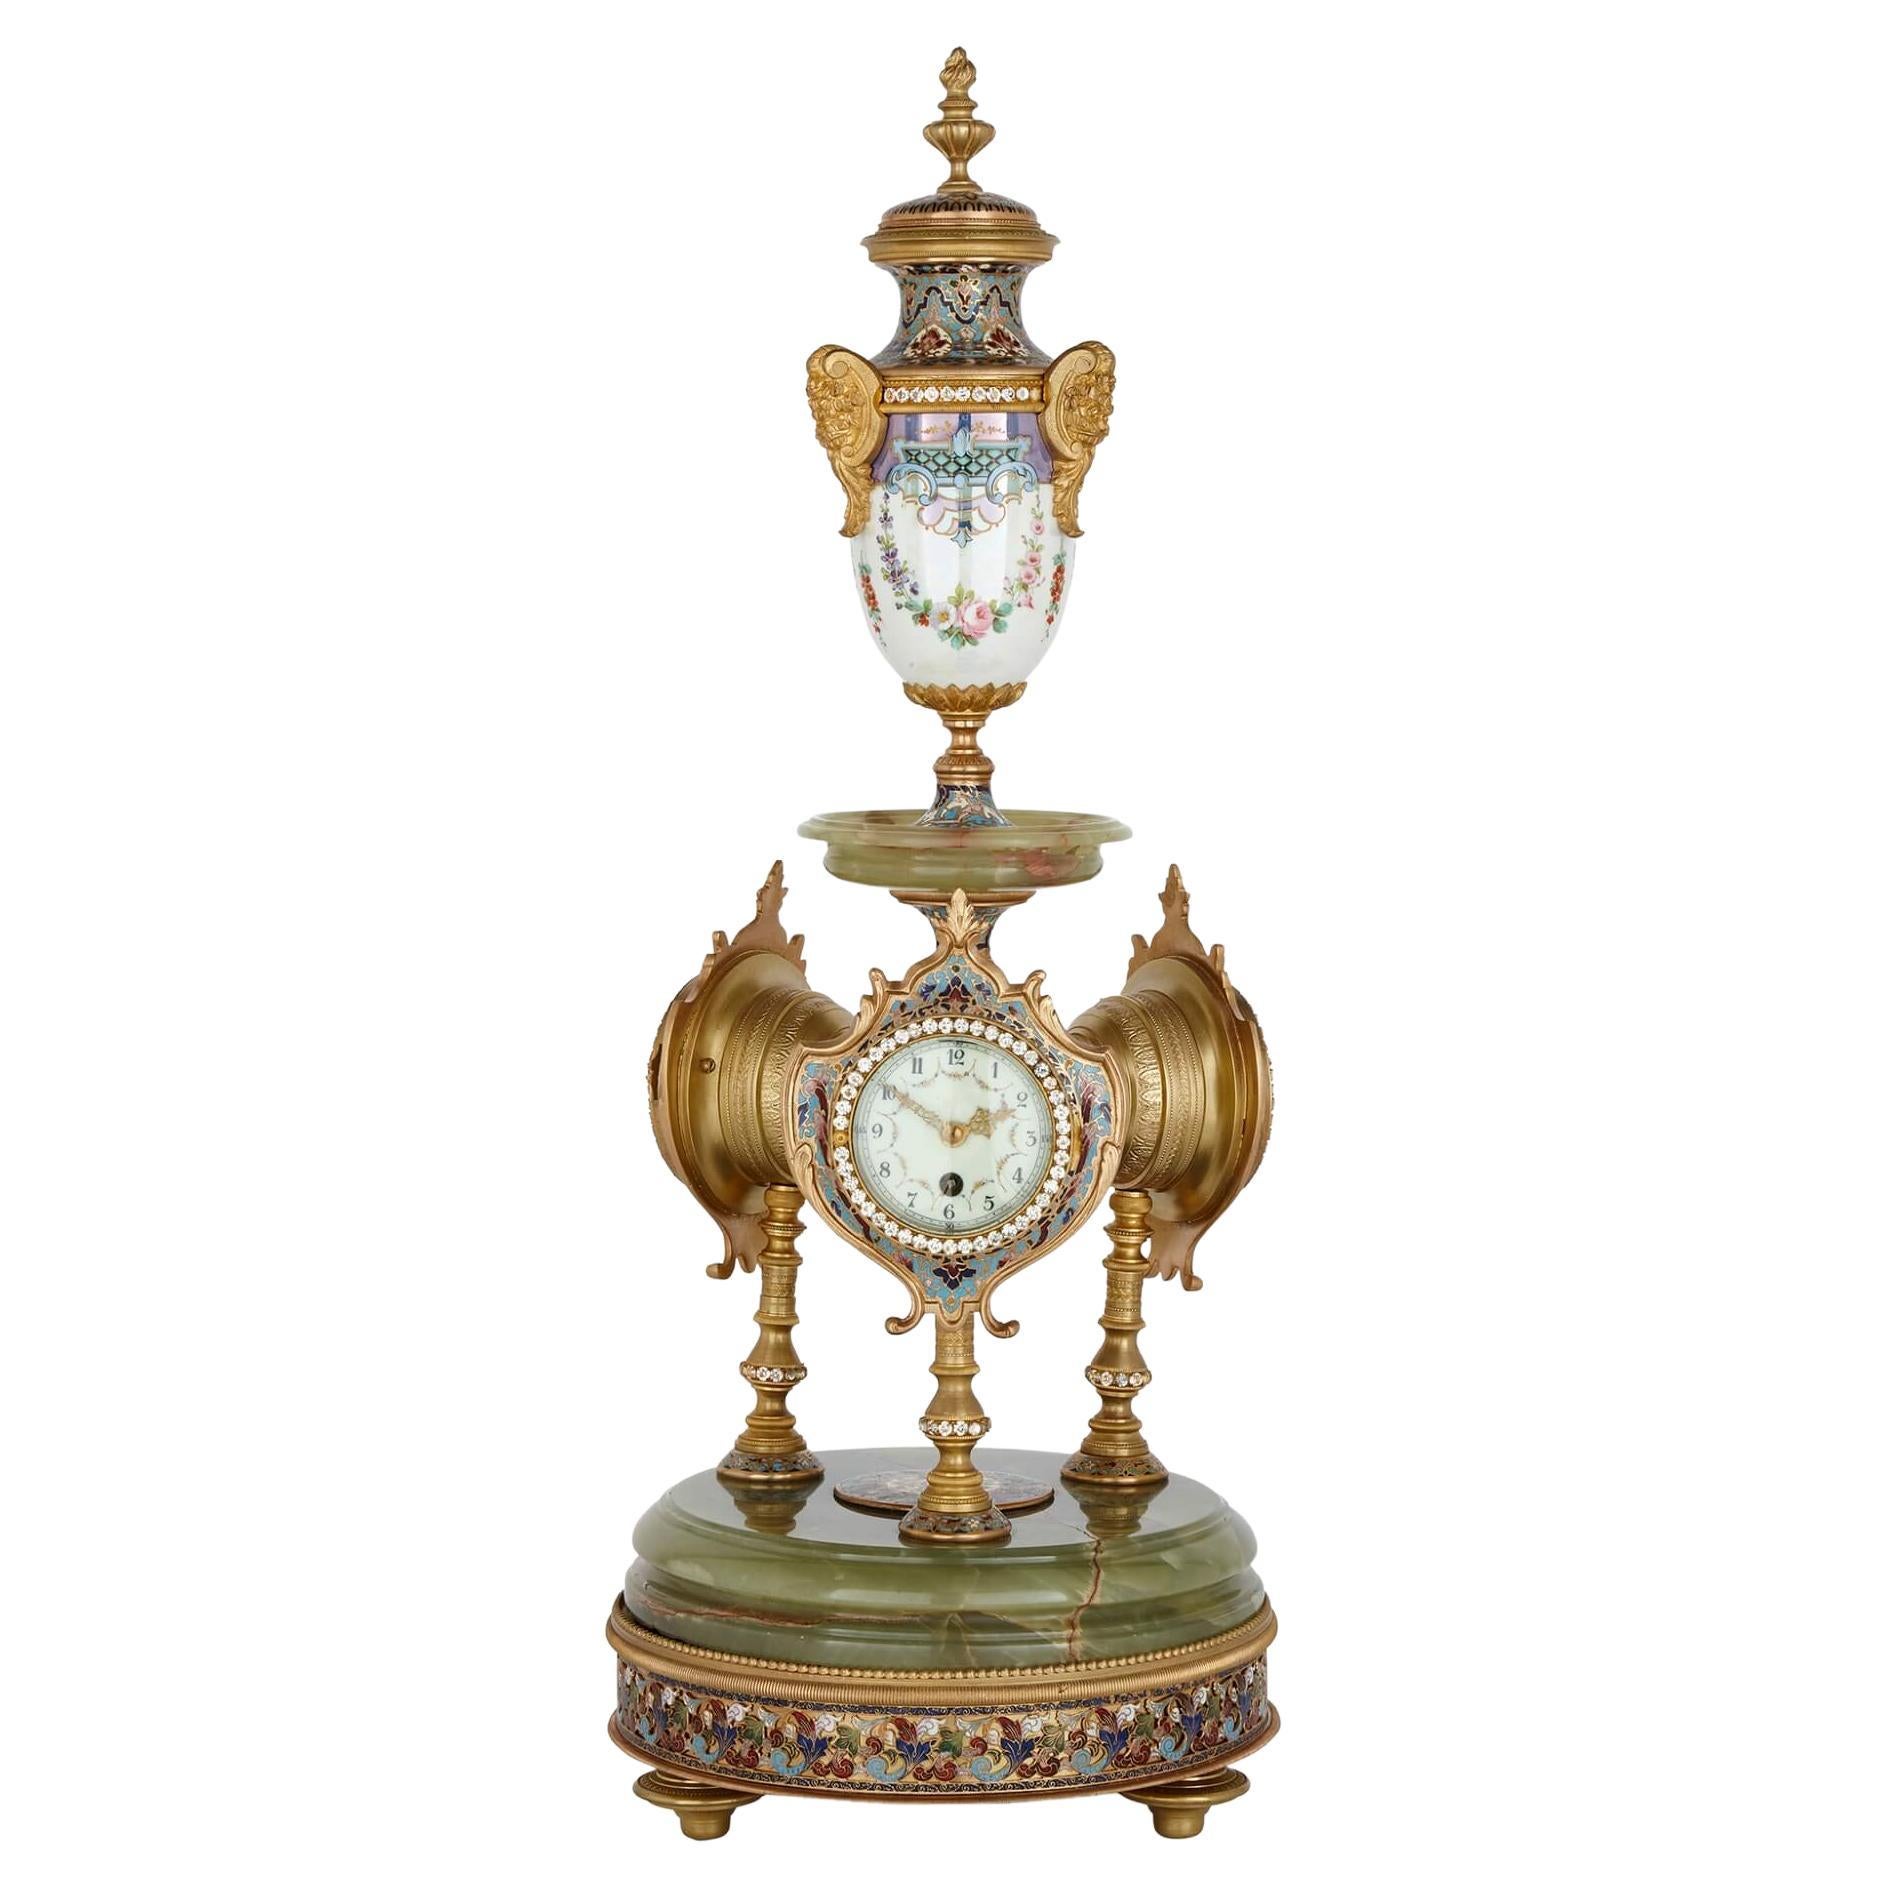 Very Fine and Rare Onyx, Porcelain, Cloisonné Enamel and Ormolu Mantel Clock